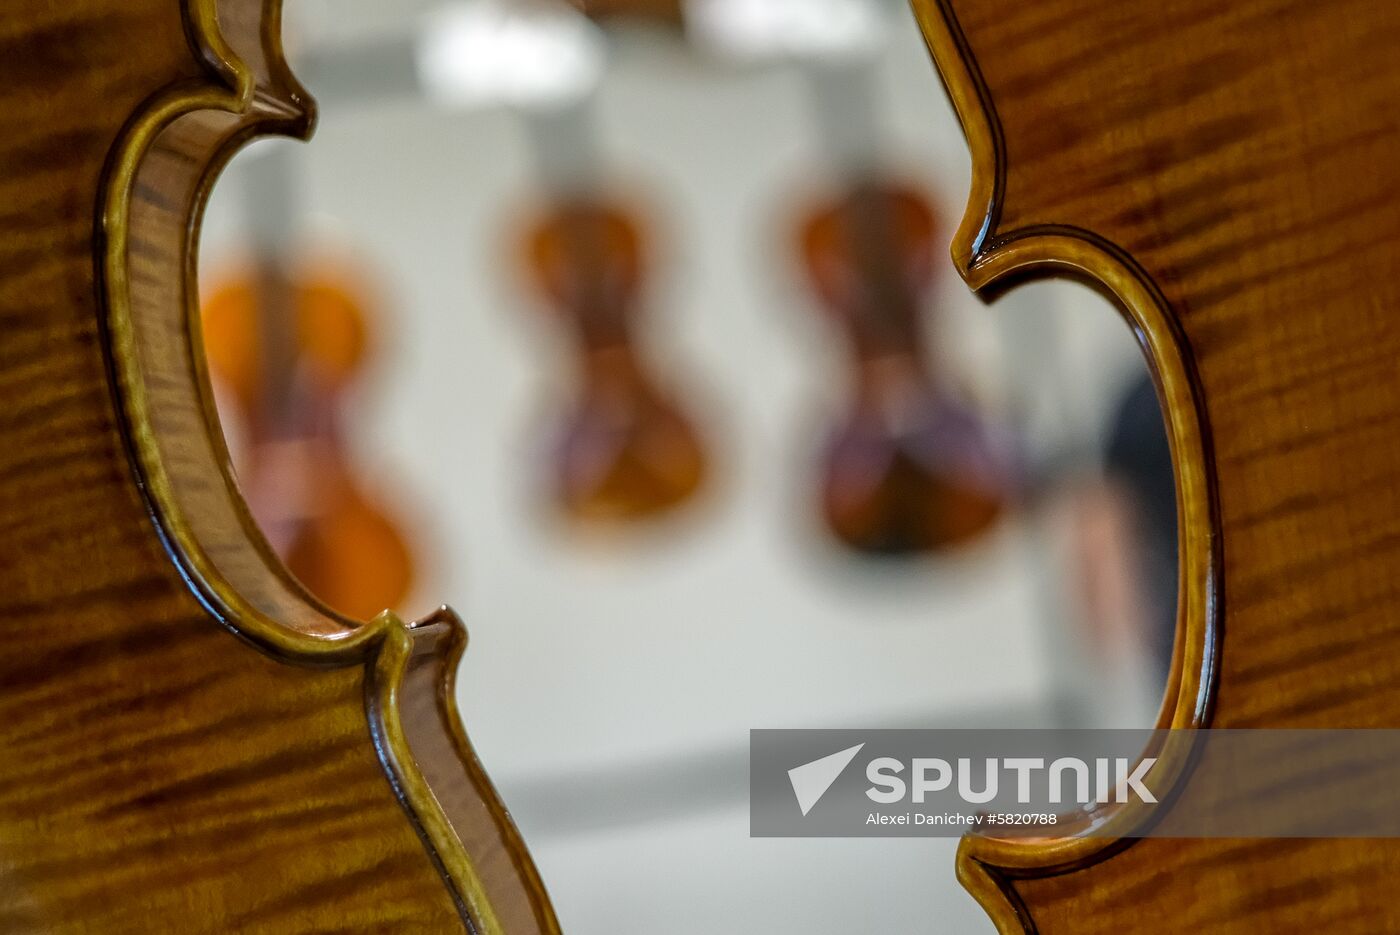 Russia Violin Exhibition